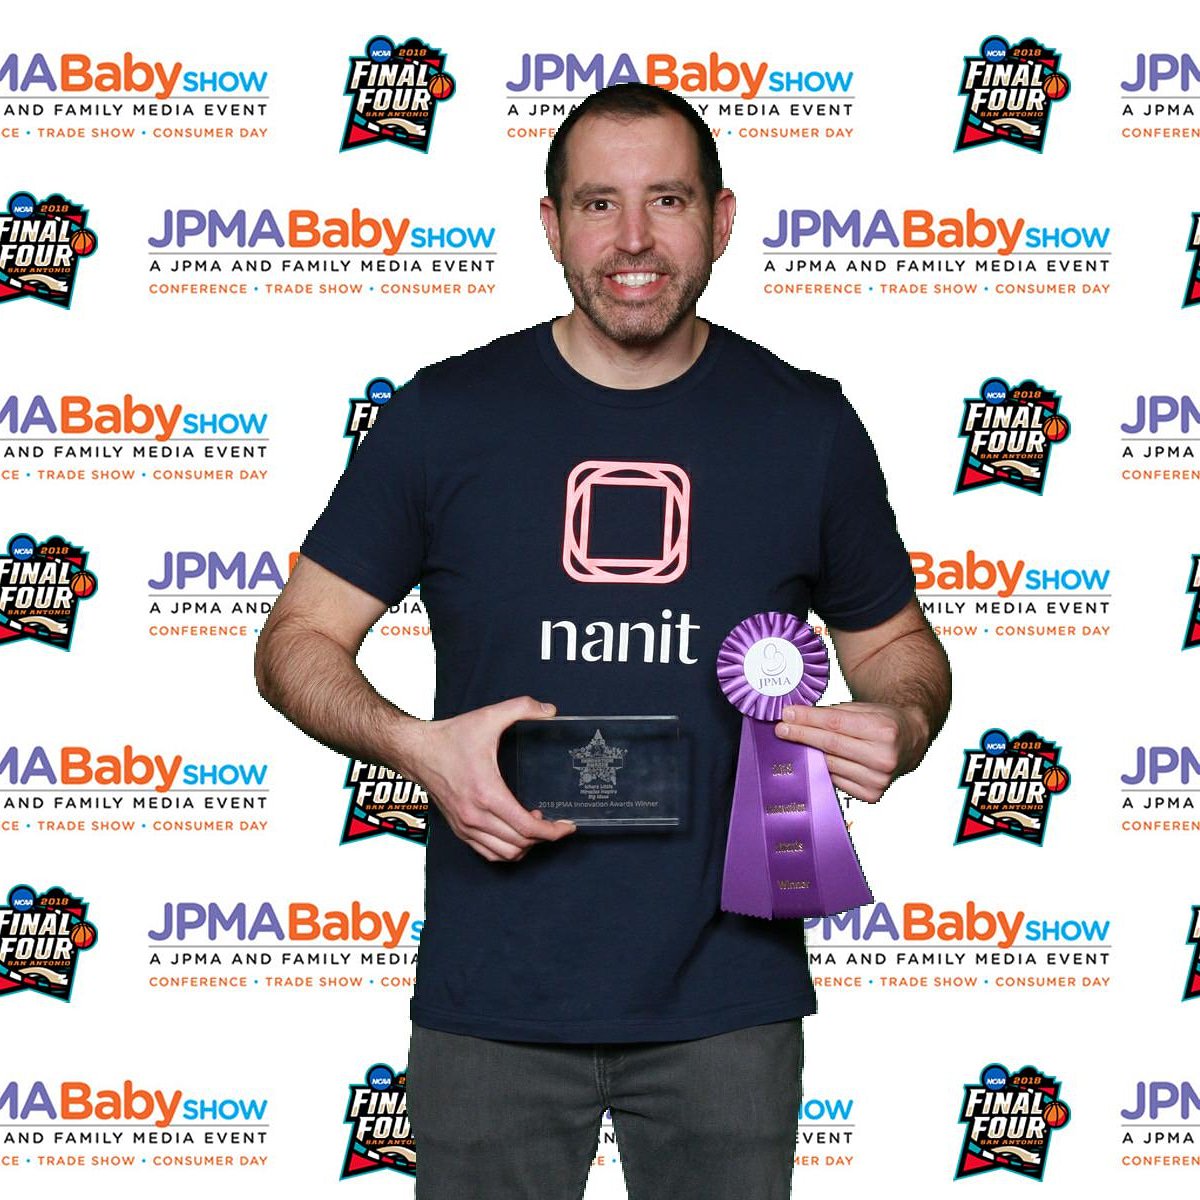 Nanit won the JPMA Baby Show Innovation Award 2018